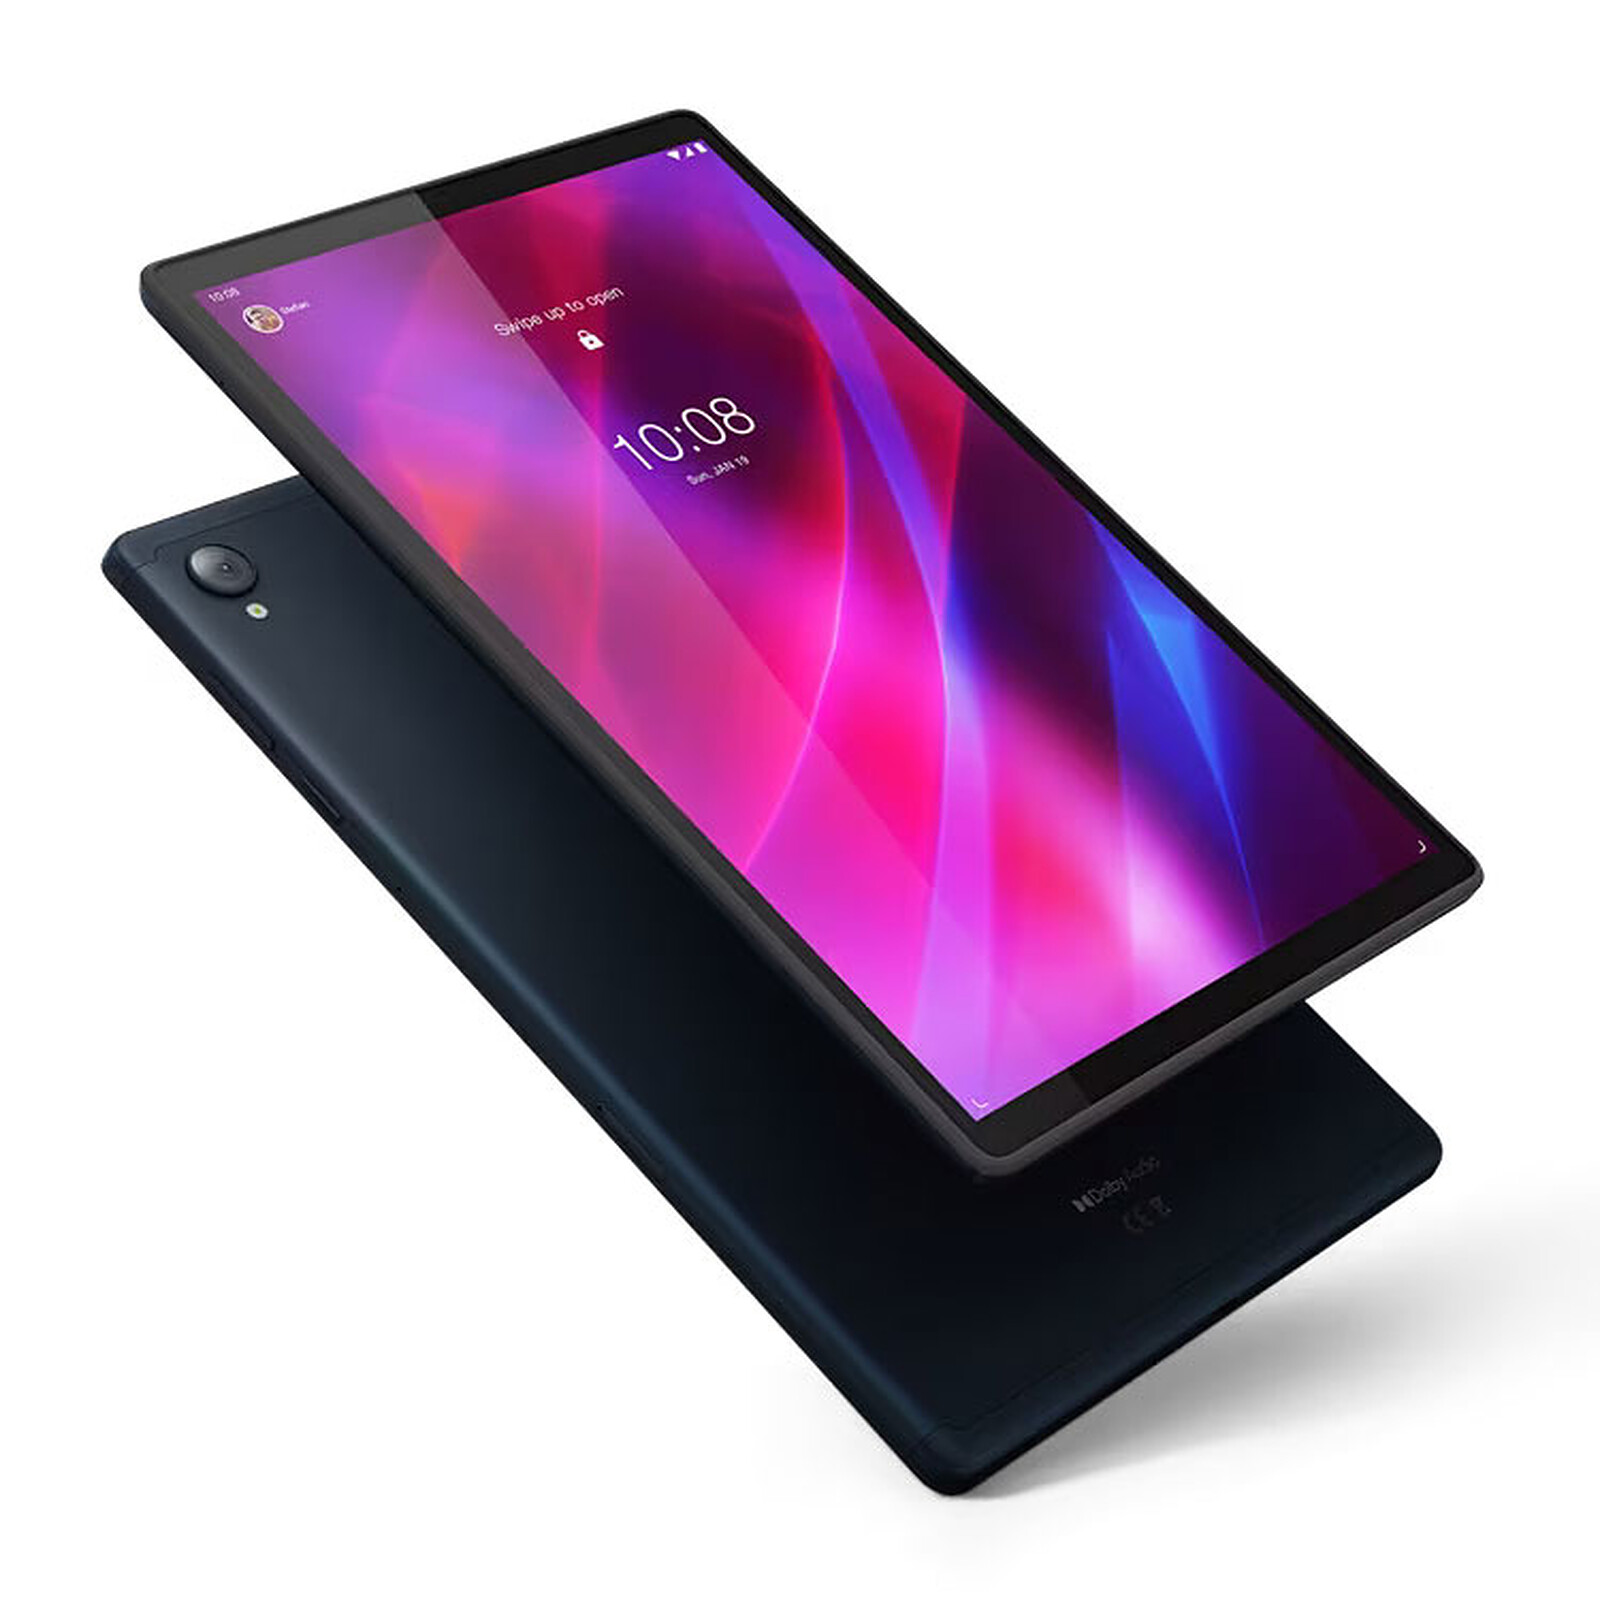 Funda para Tablet Lenovo Tab K10 color gris